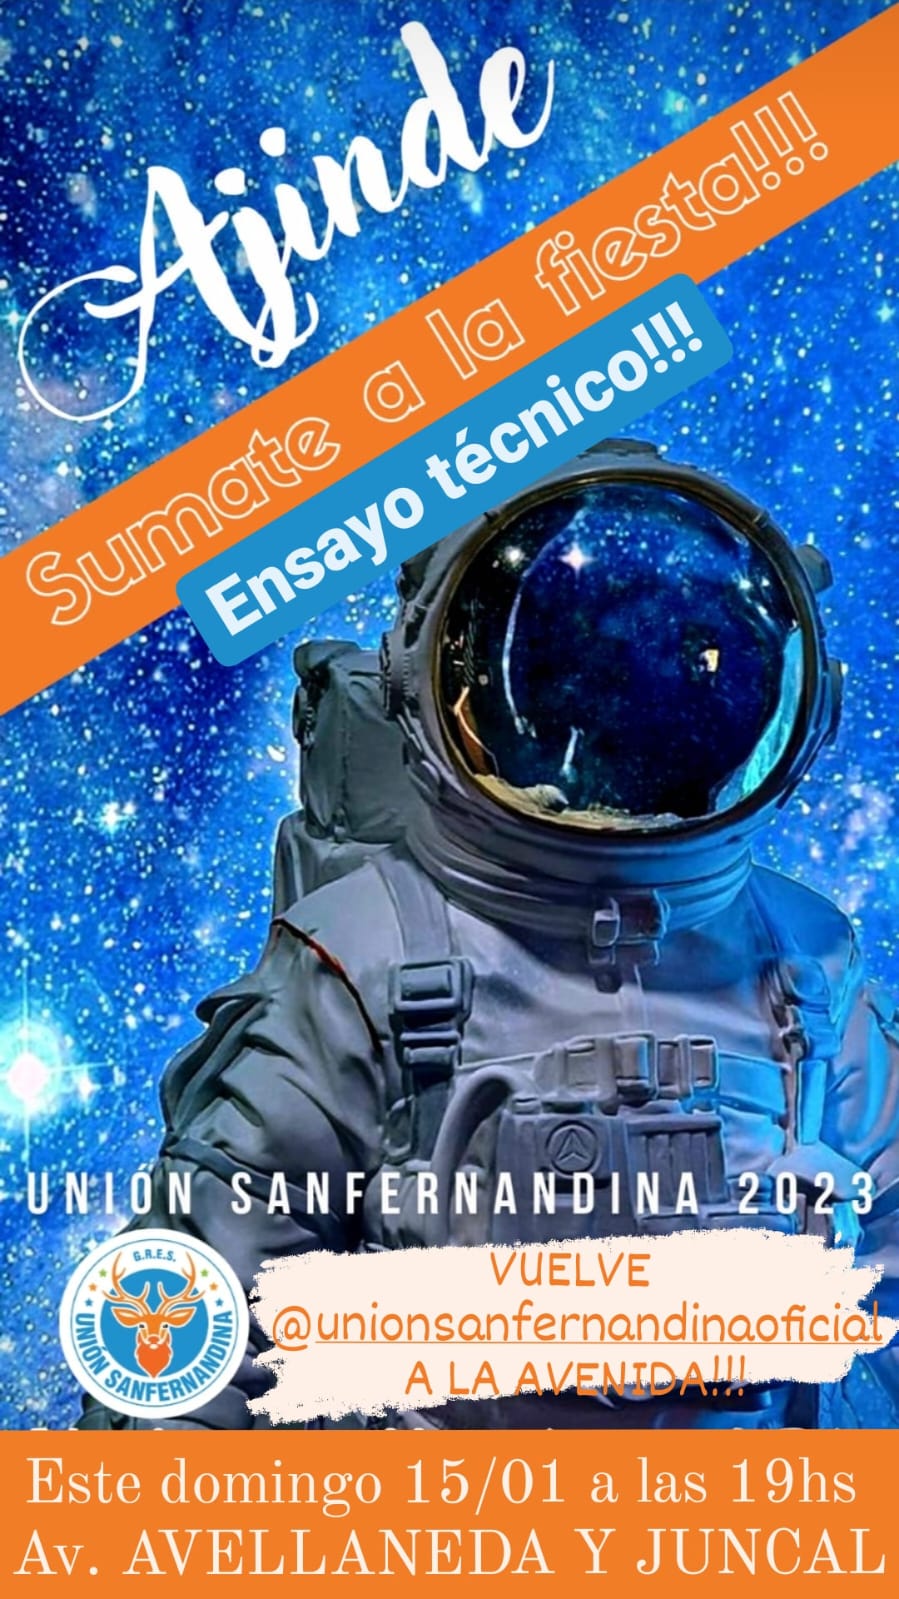 Este domingo “Unión Sanfernandina” tendrá su ensayo técnico abierto en la Av. Avellaneda